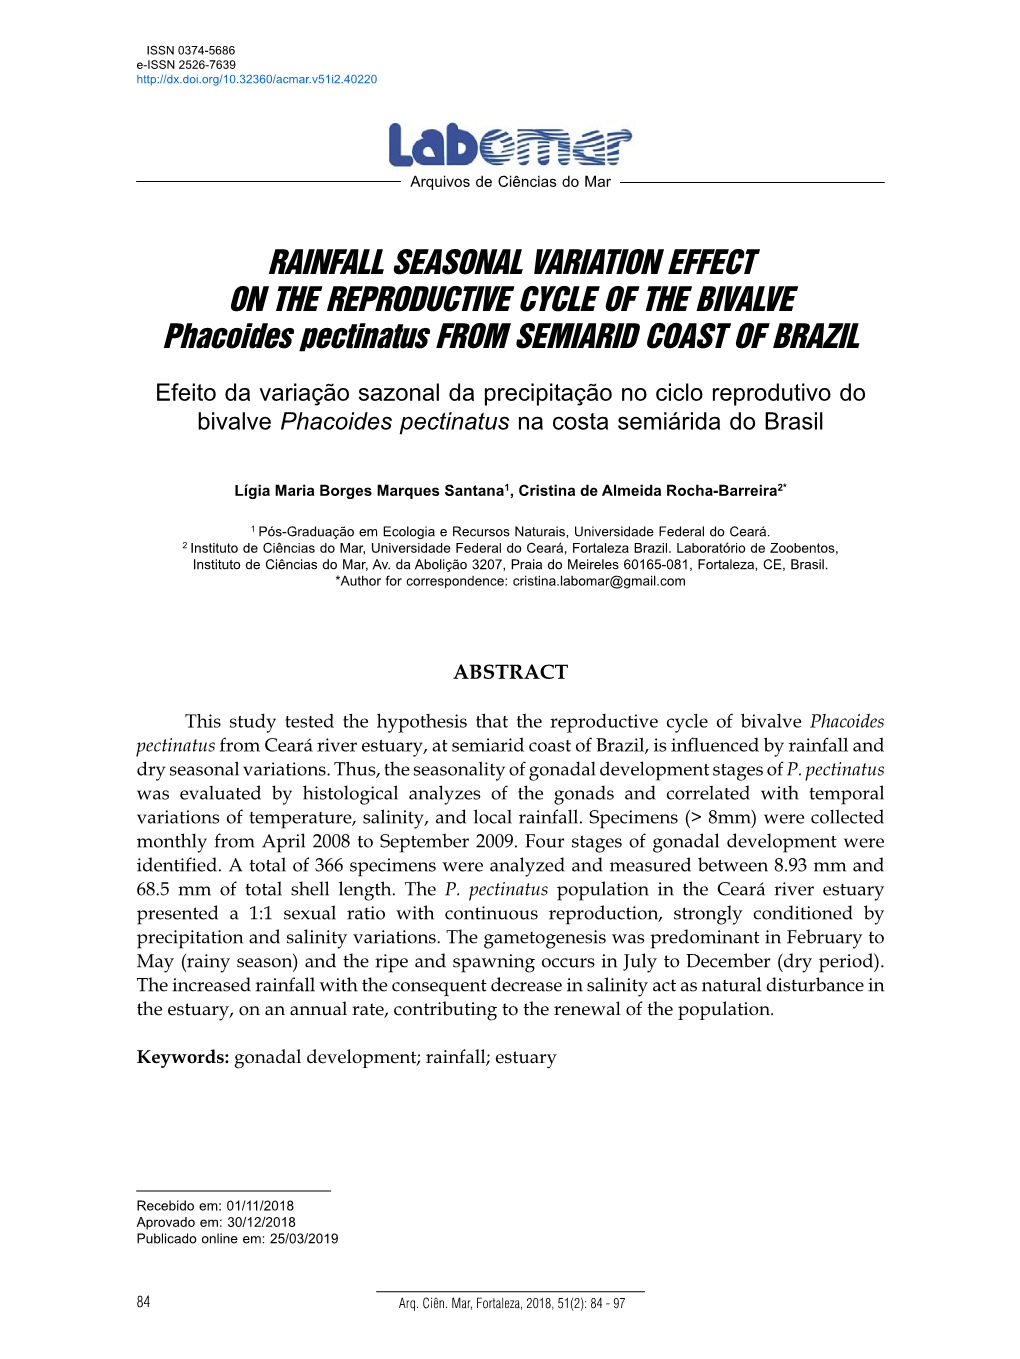 RAINFALL SEASONAL VARIATION EFFECT on the REPRODUCTIVE CYCLE of the BIVALVE Phacoides Pectinatus from SEMIARID COAST of BRAZIL